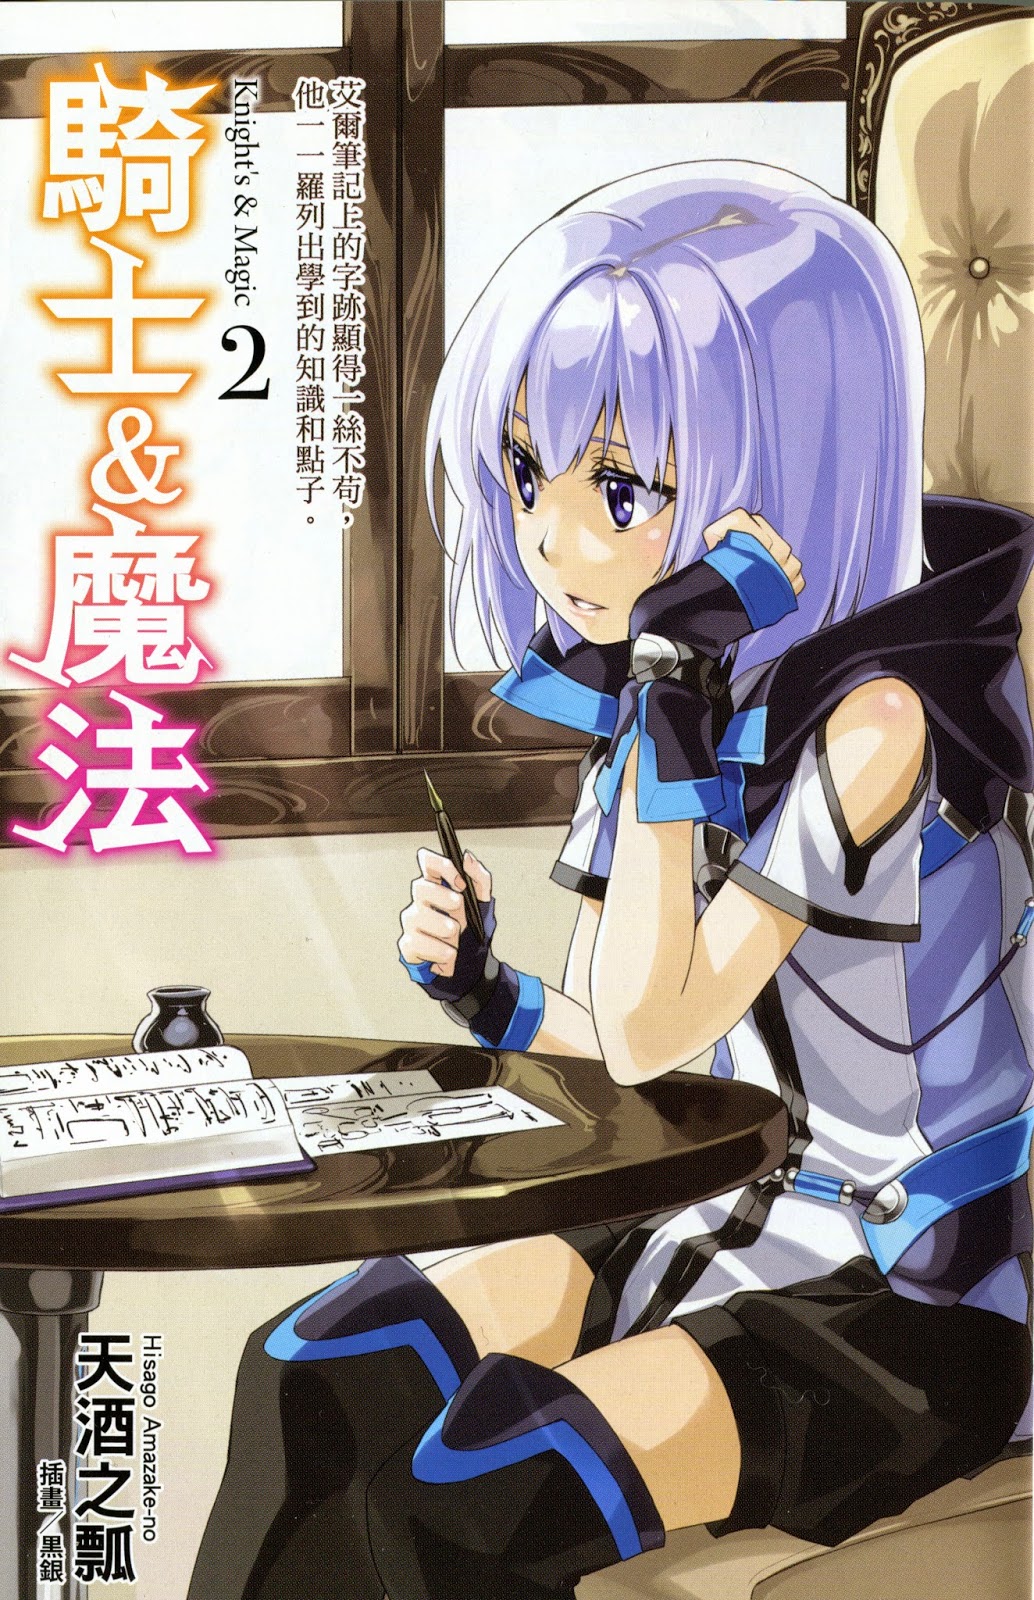 Knight's & Magic: Volume 1 (Light Novel) by Hisago Amazake-no, Kurogin, eBook